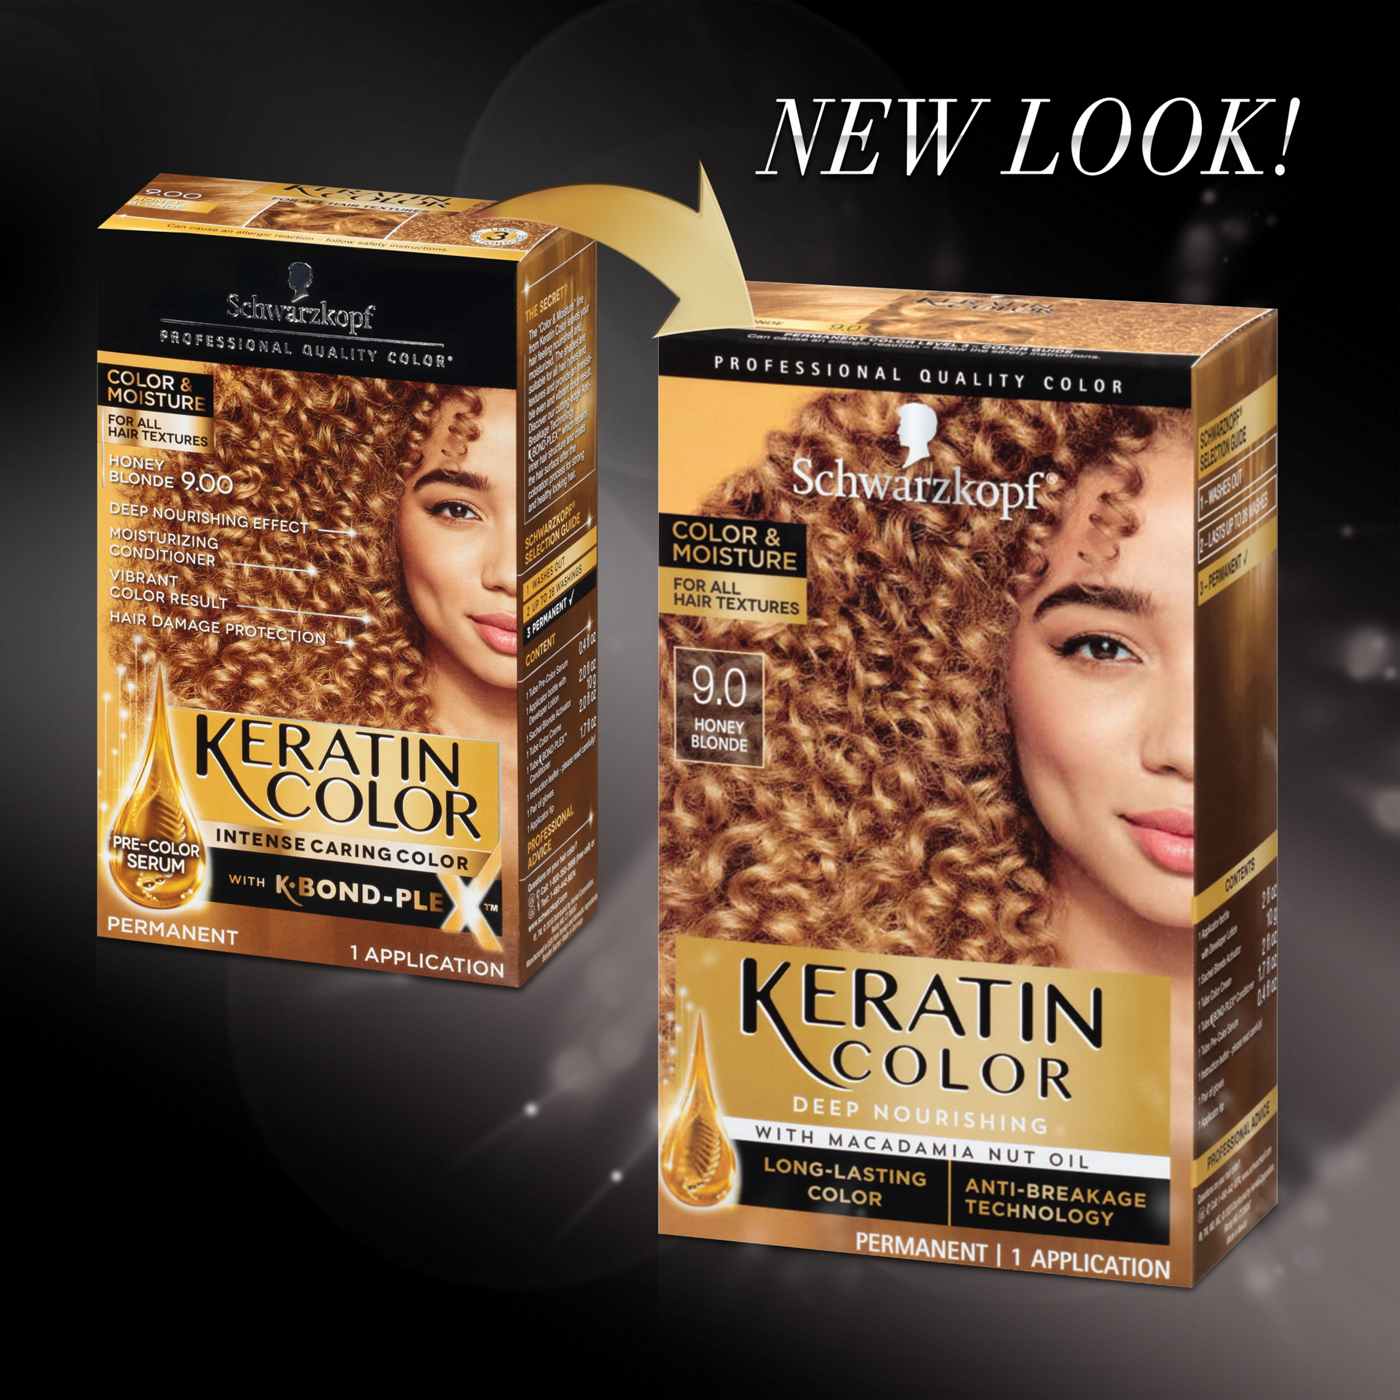 Schwarzkopf Keratin Color, Color & Moisture Permanent Hair Color Cream, 9.00 Honey Blonde; image 4 of 6